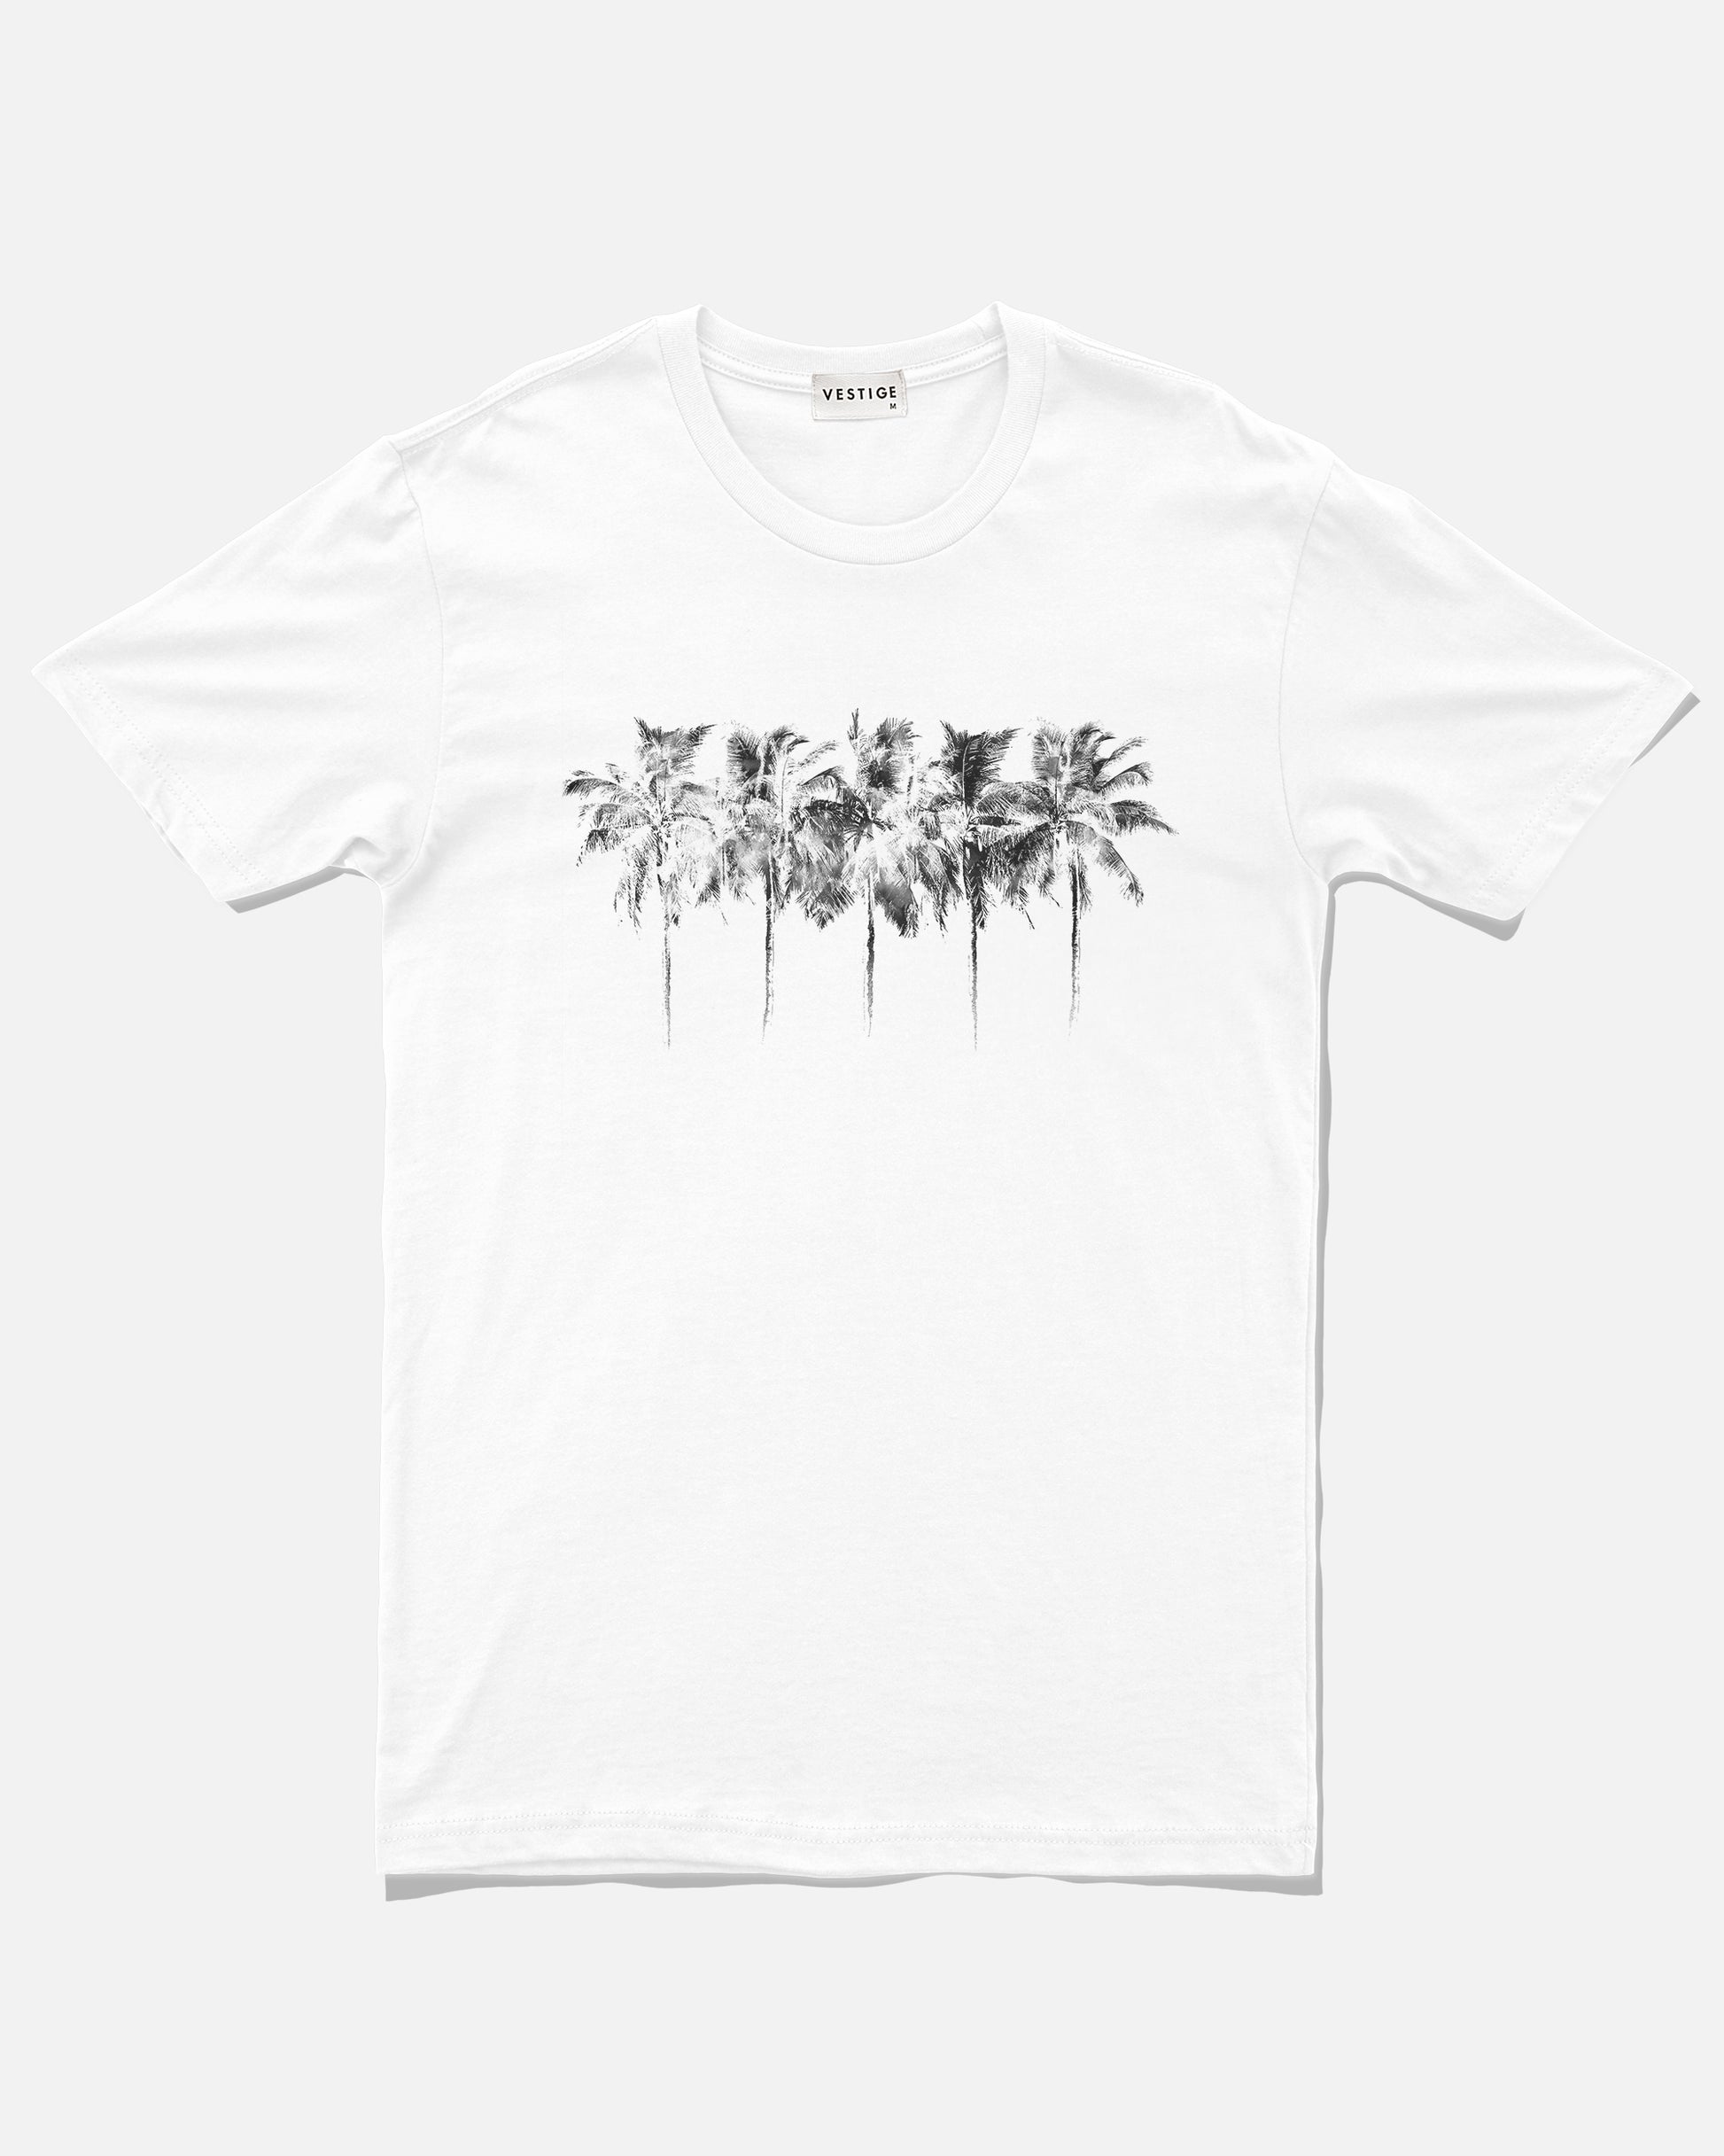 Row Of Palms T-Shirt, White-VESTIGE